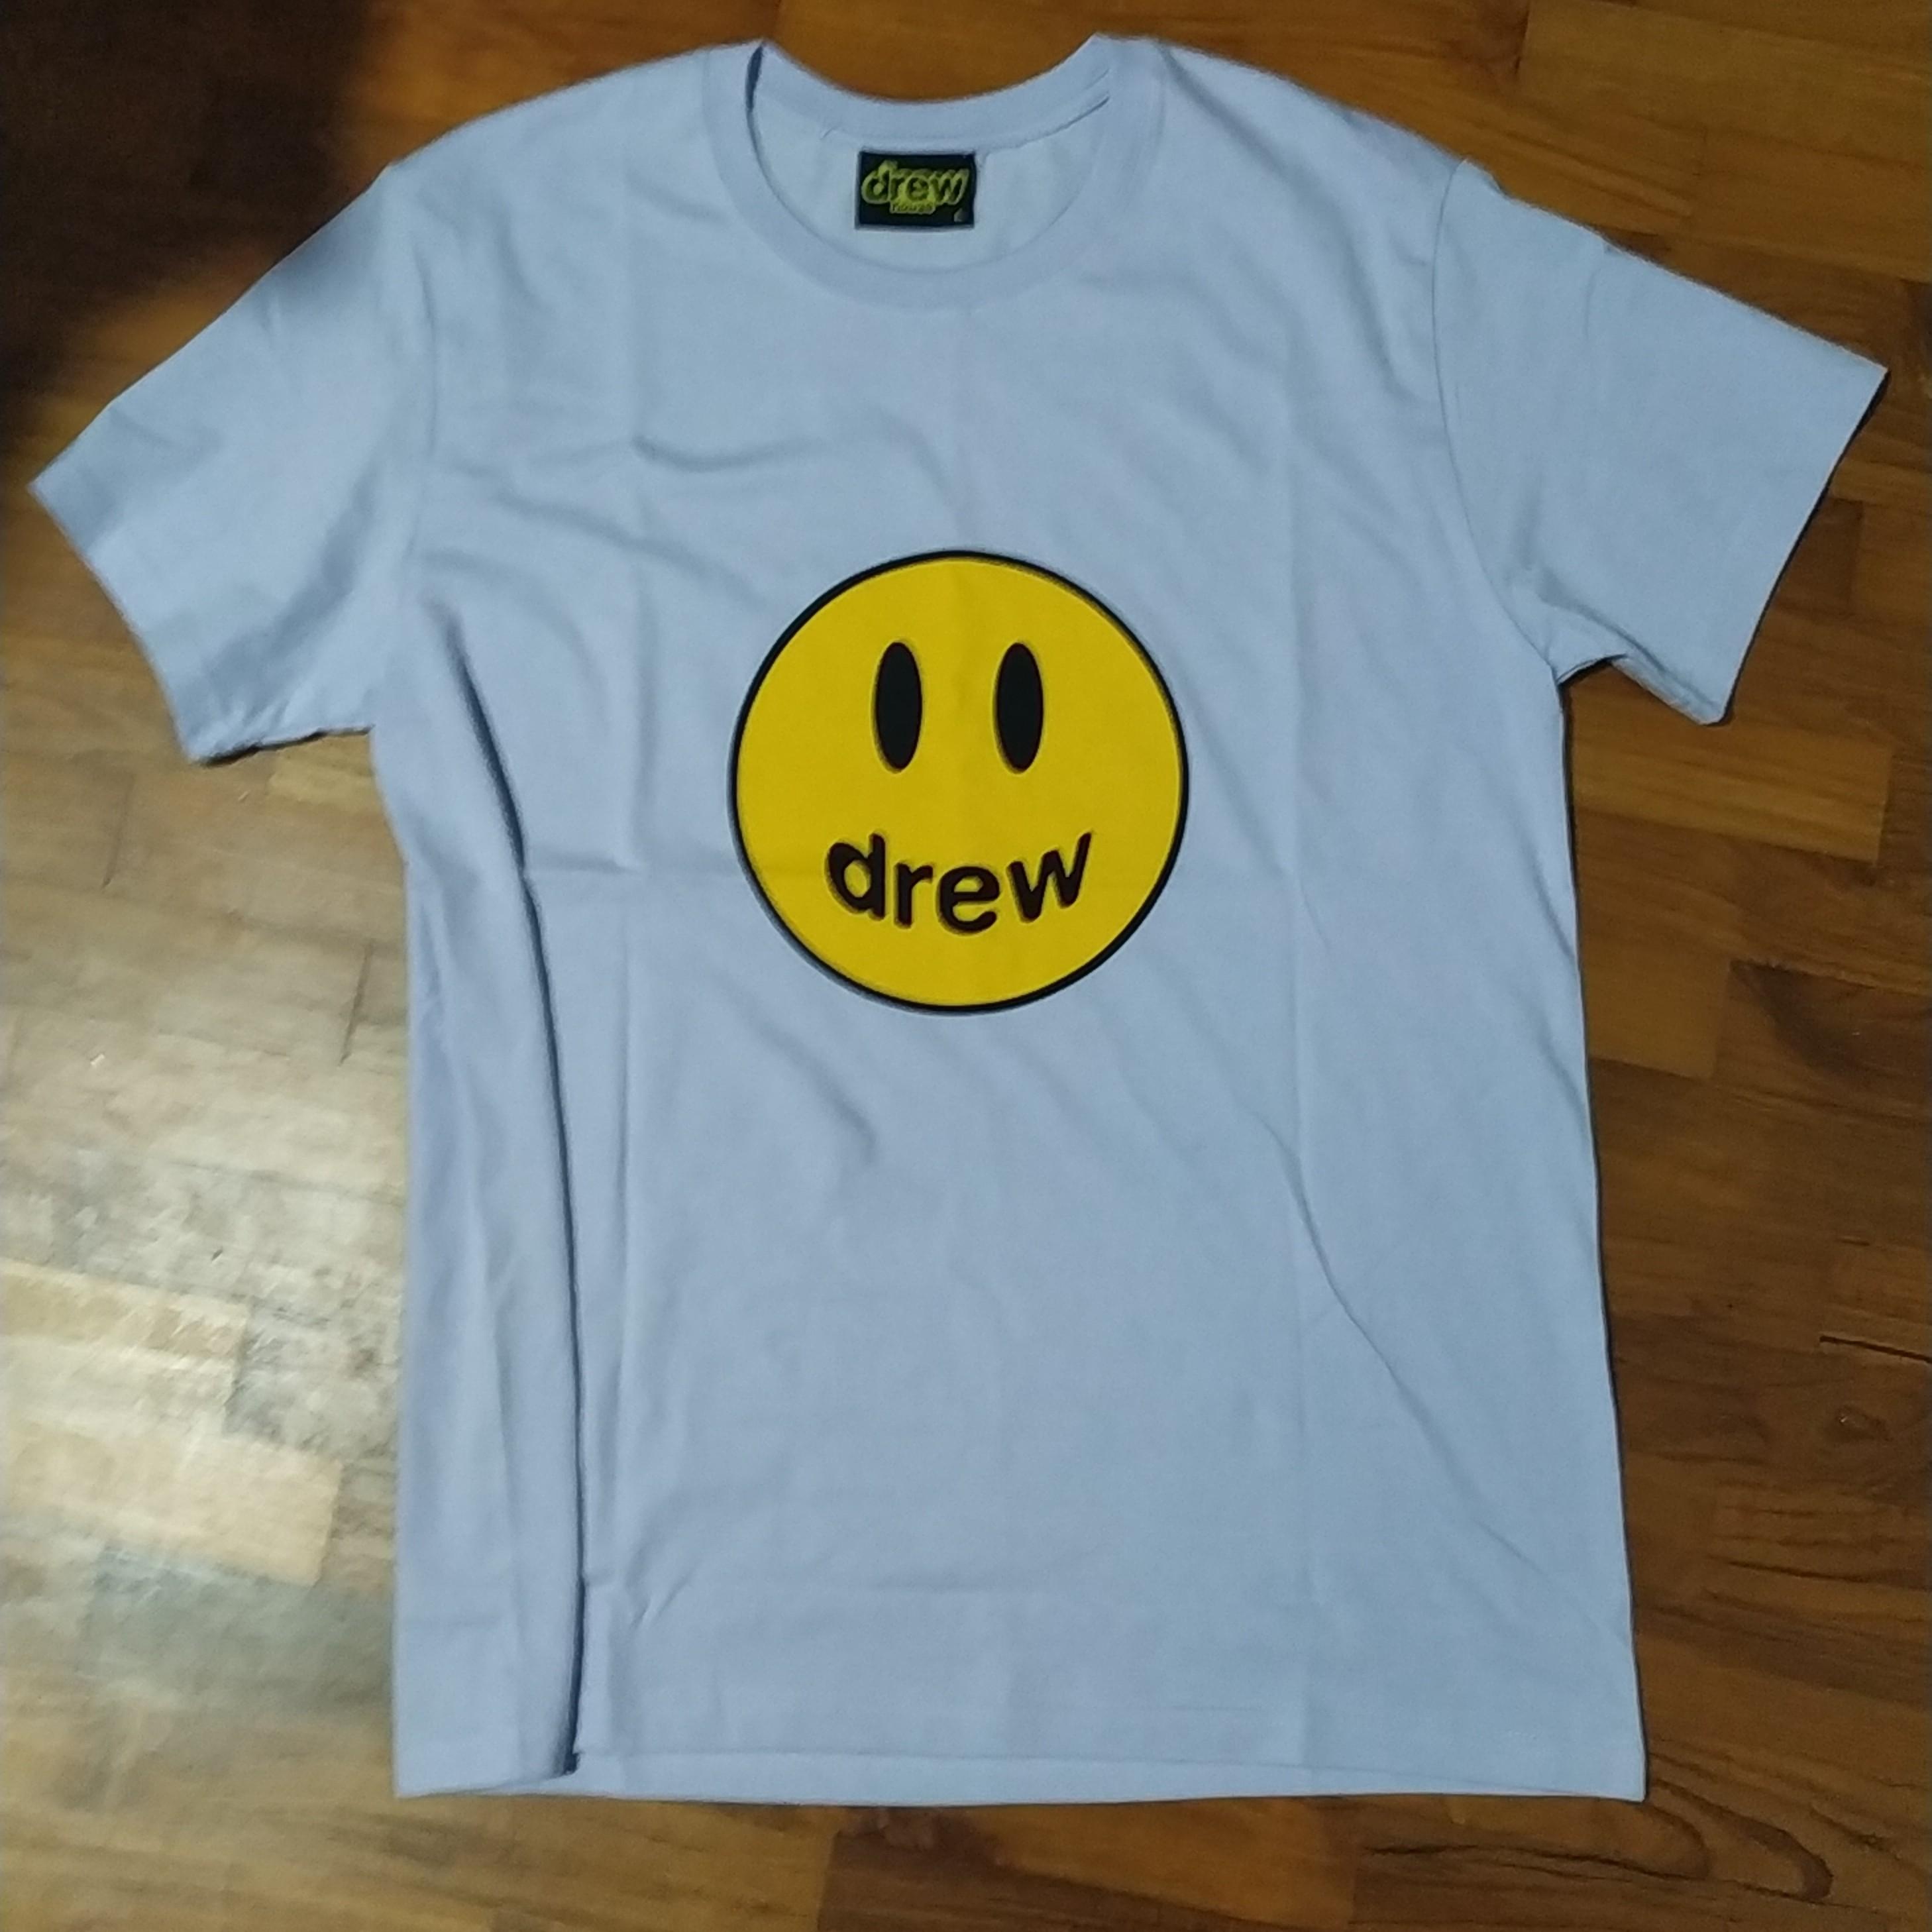 drew shirt